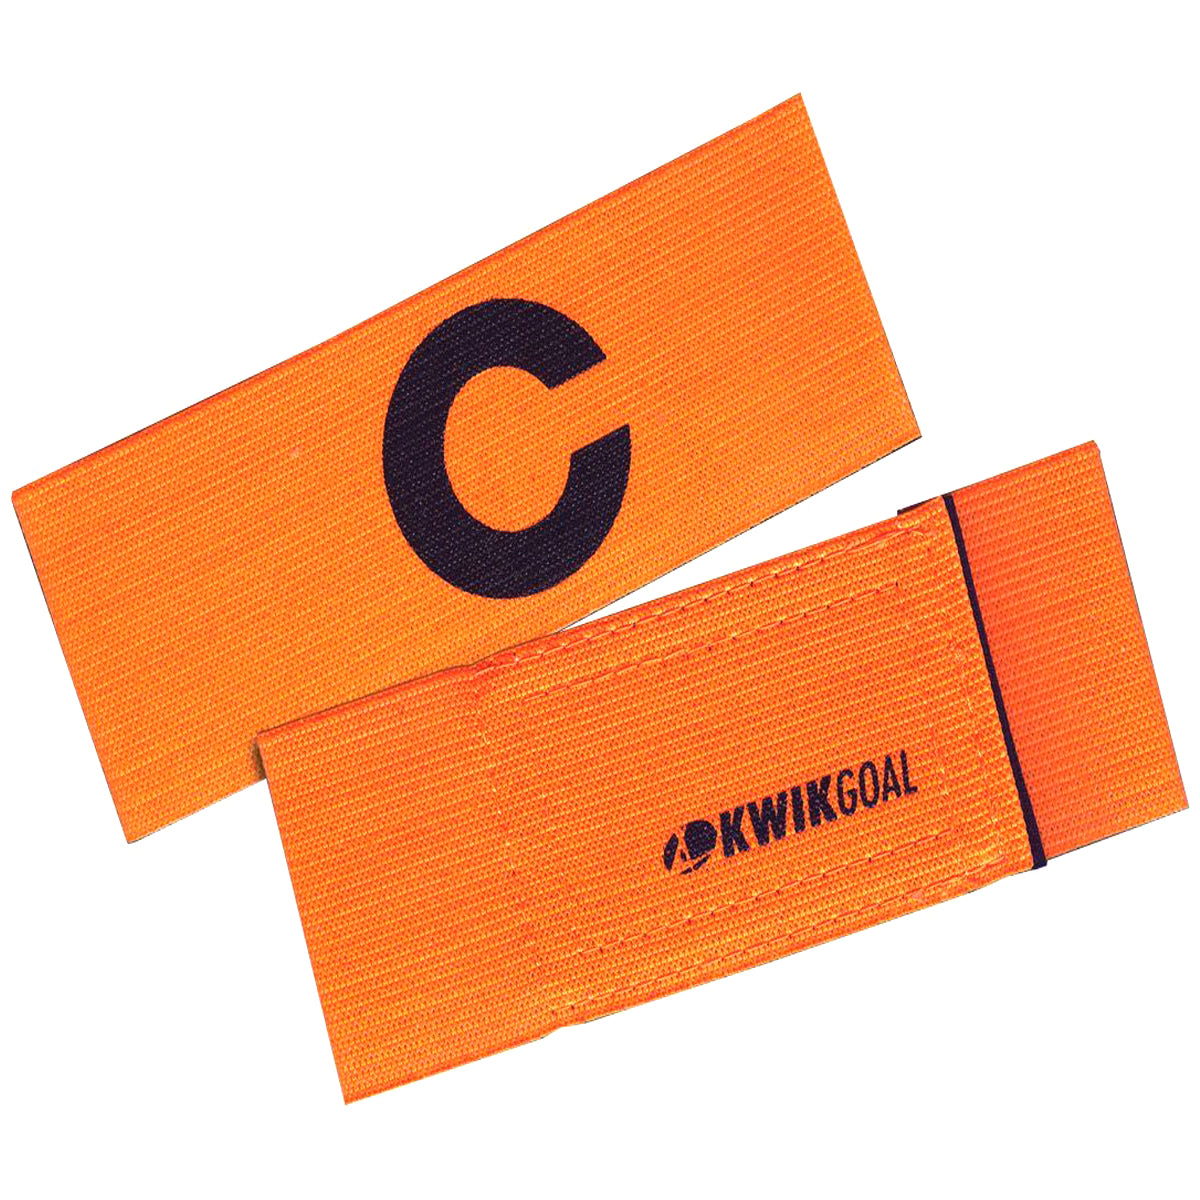 Kwikgoal Captain "C" Arm Bands | 19B12 Training equipment Kwikgoal High-Vis Orange 